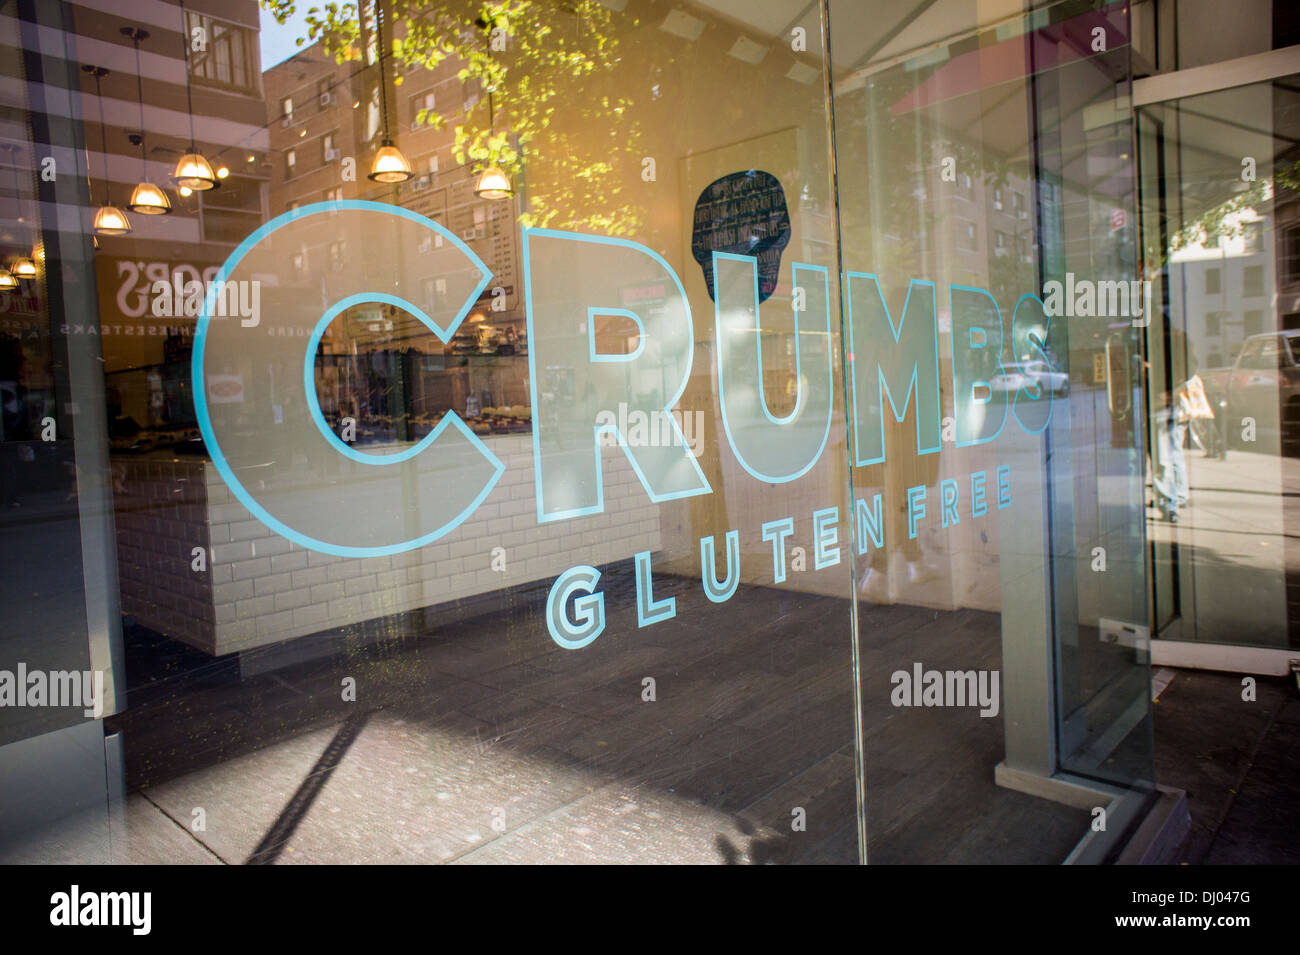 The Crumbs brand gluten-free bake shop in Greenwich Village in New York Stock Photo